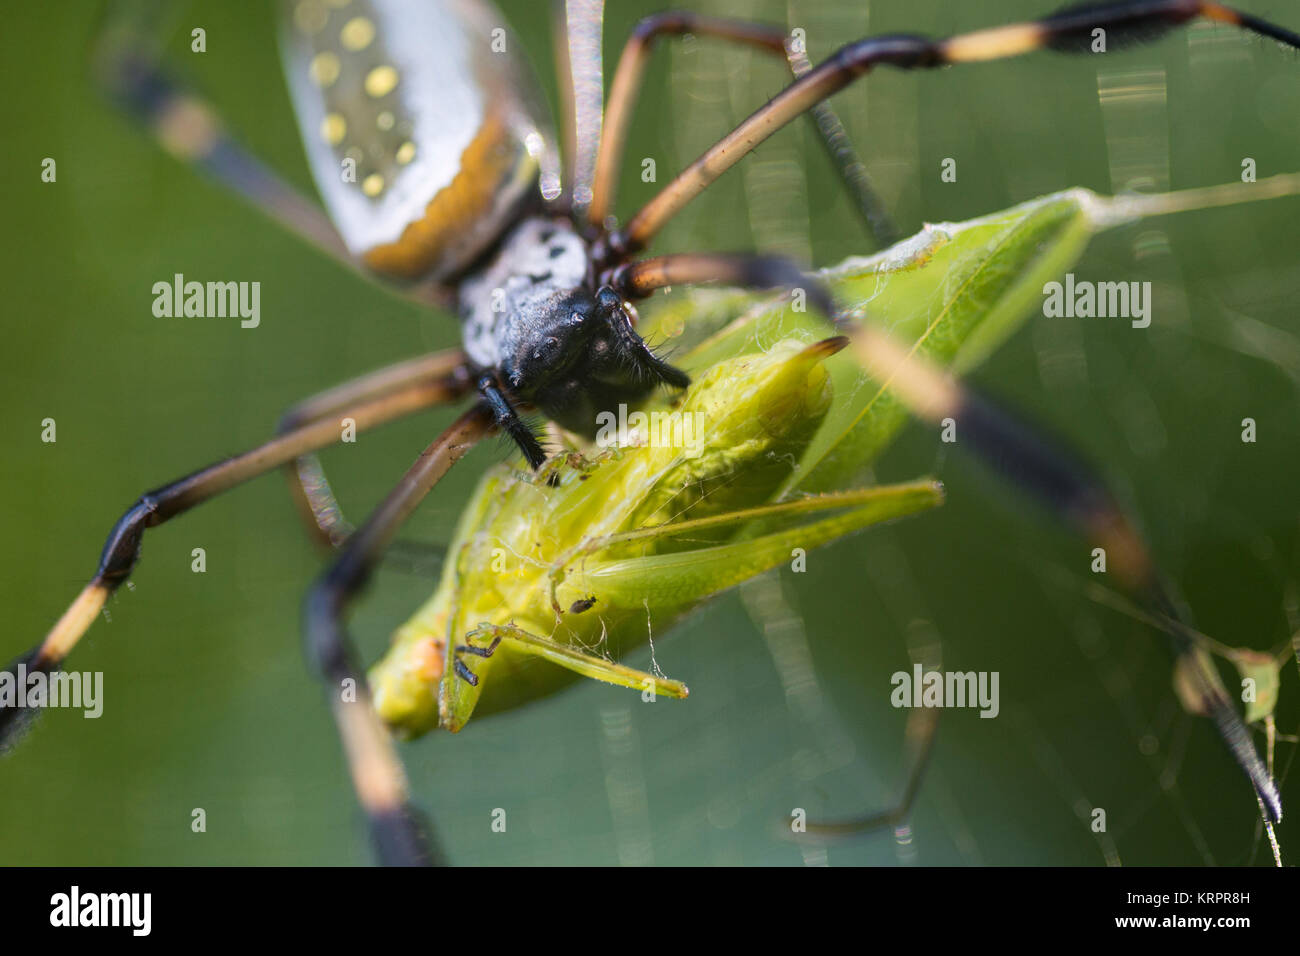 A Costa Rican golden orb spider eats a cricket Stock Photo